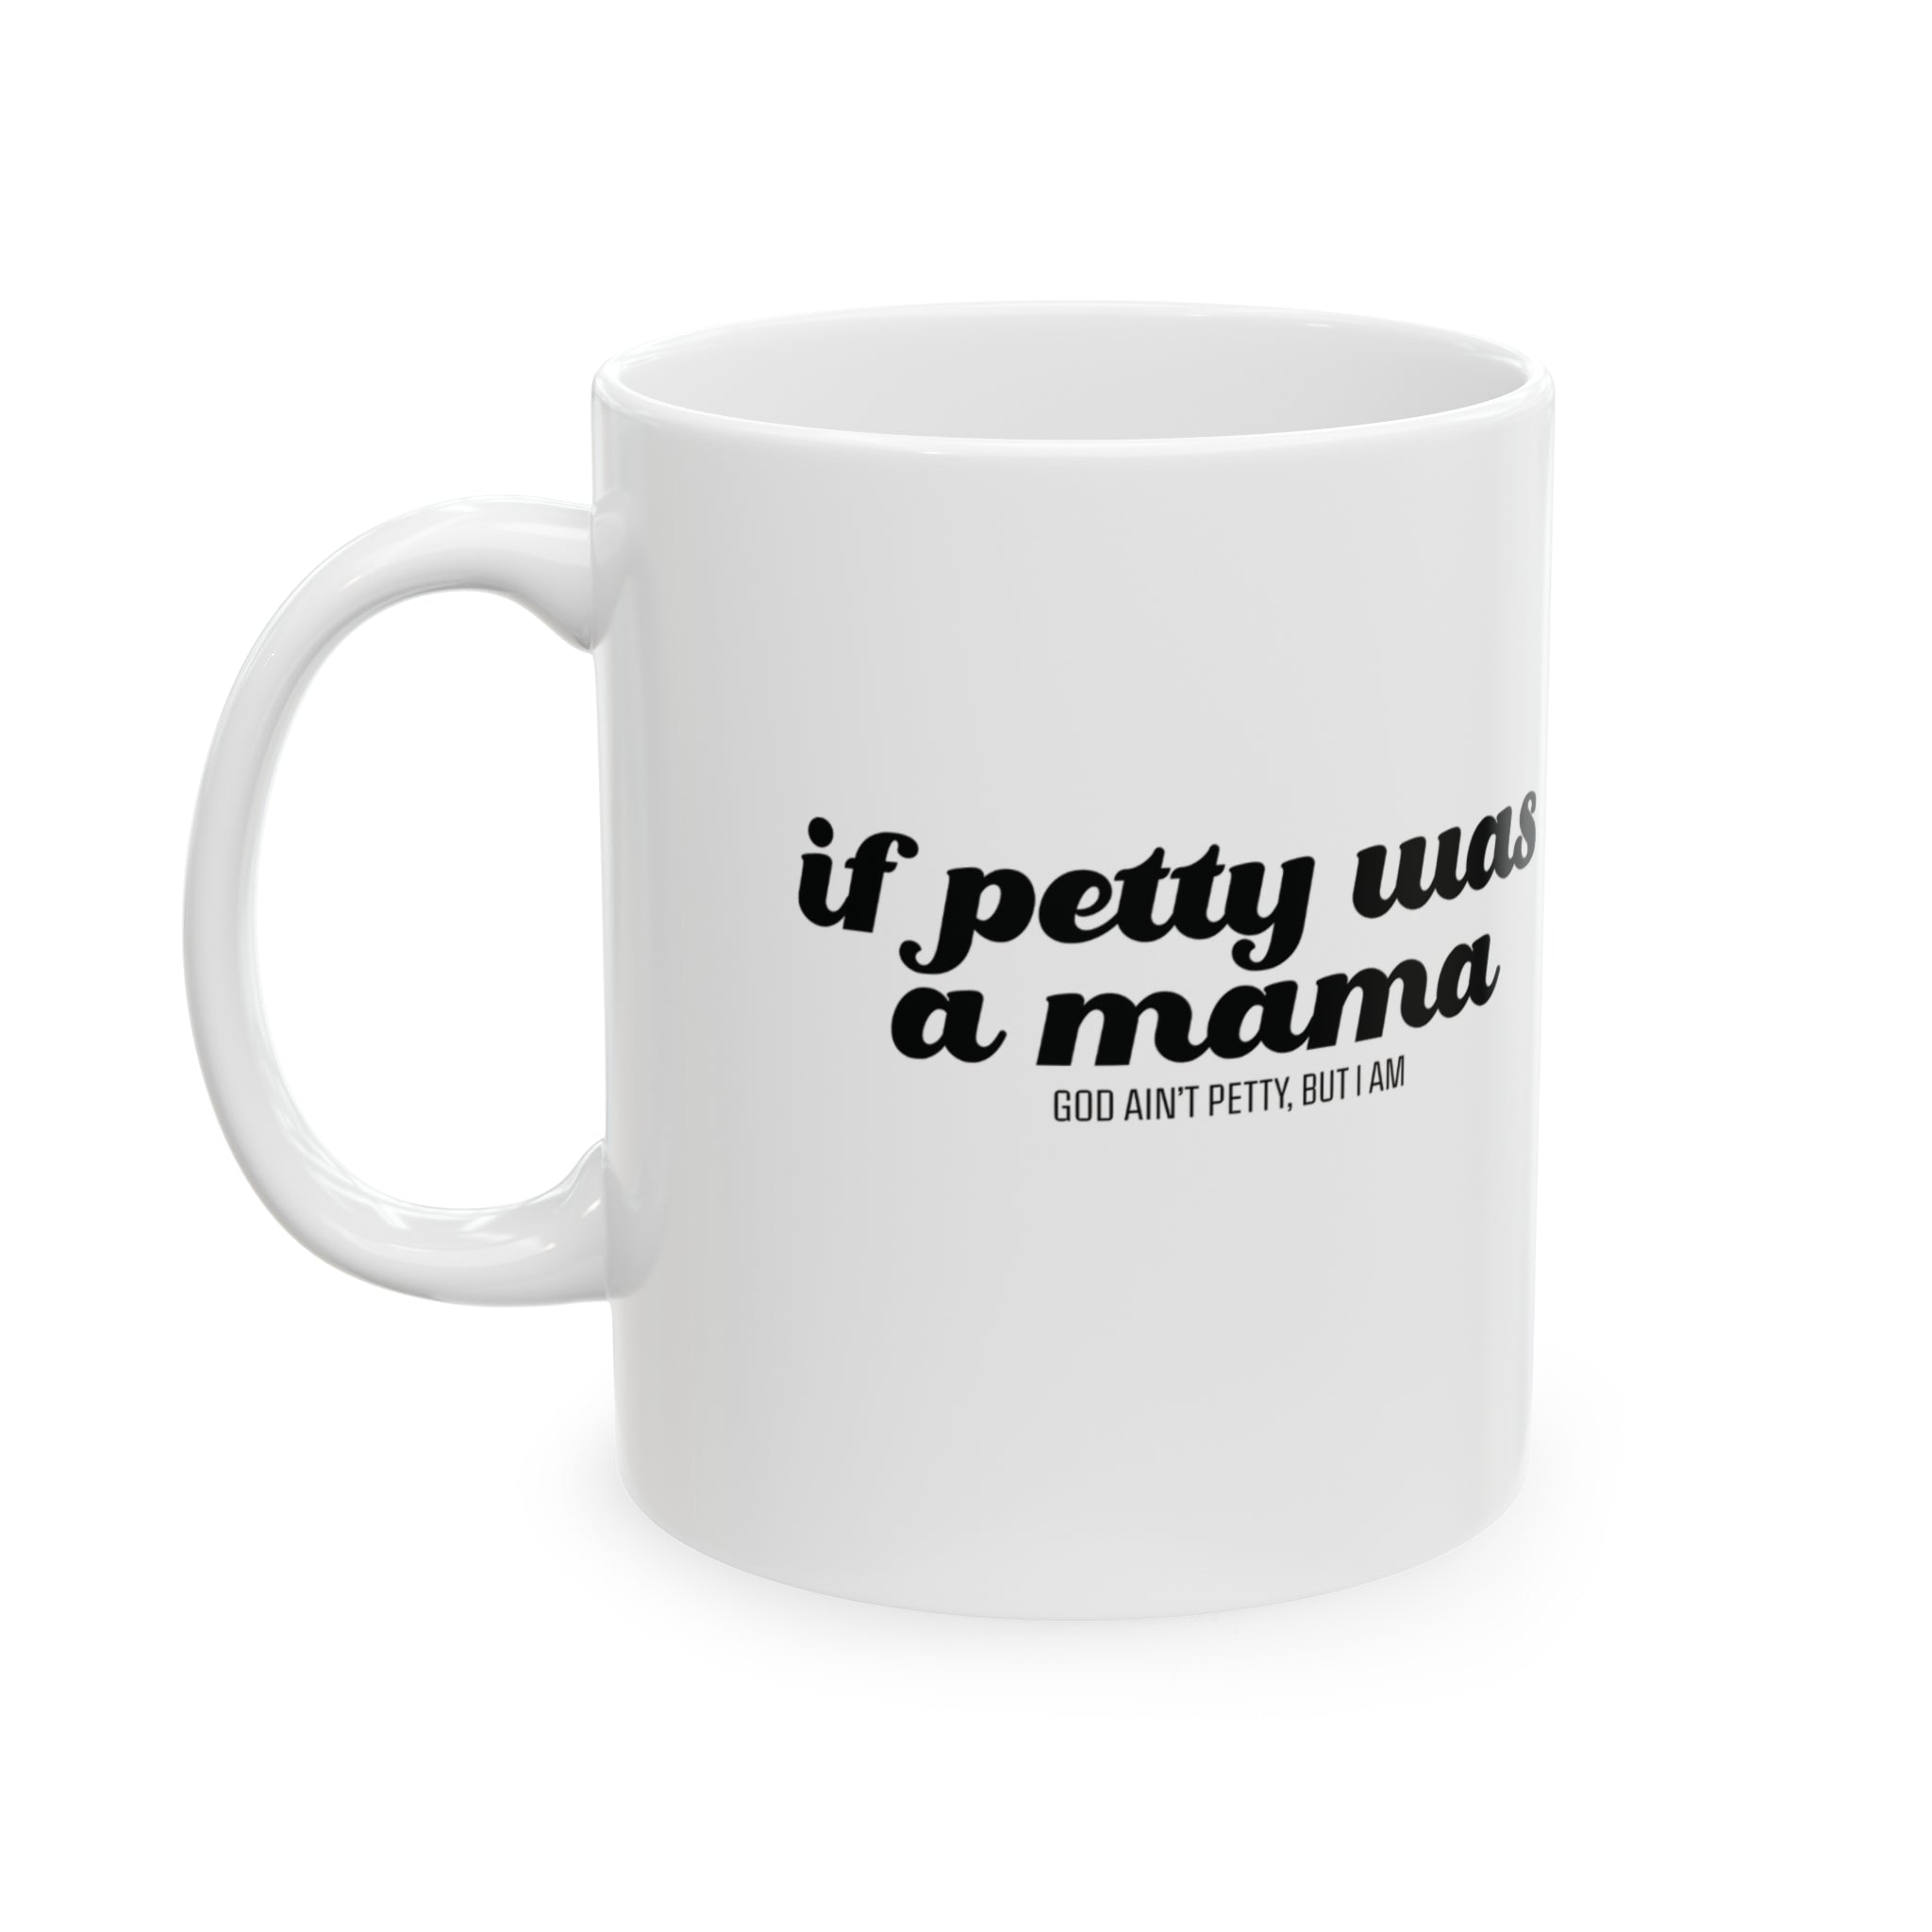 If Petty Was a Mama Mug 11oz ( White & Black)-Mug-The Original God Ain't Petty But I Am